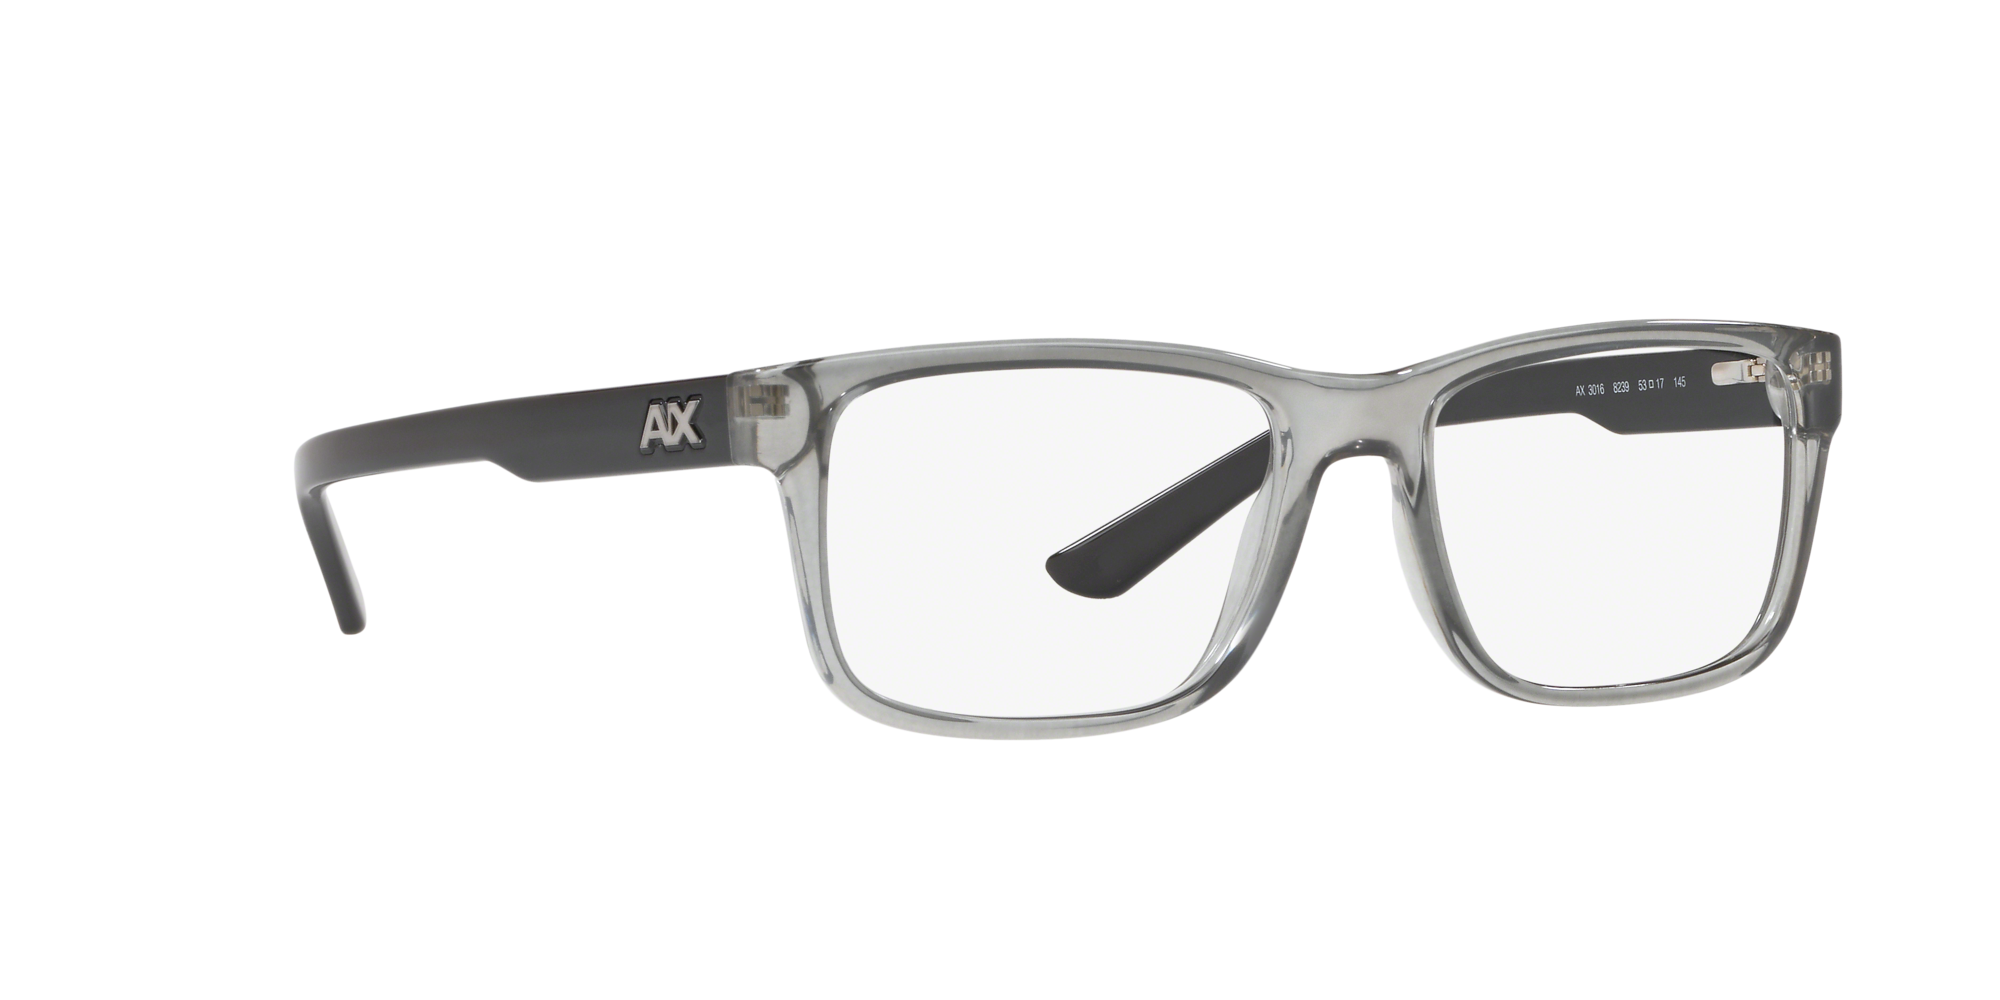 Angle_Right01 Armani Exchange AX 3016 Glasses Transparent / Transparent, Grey